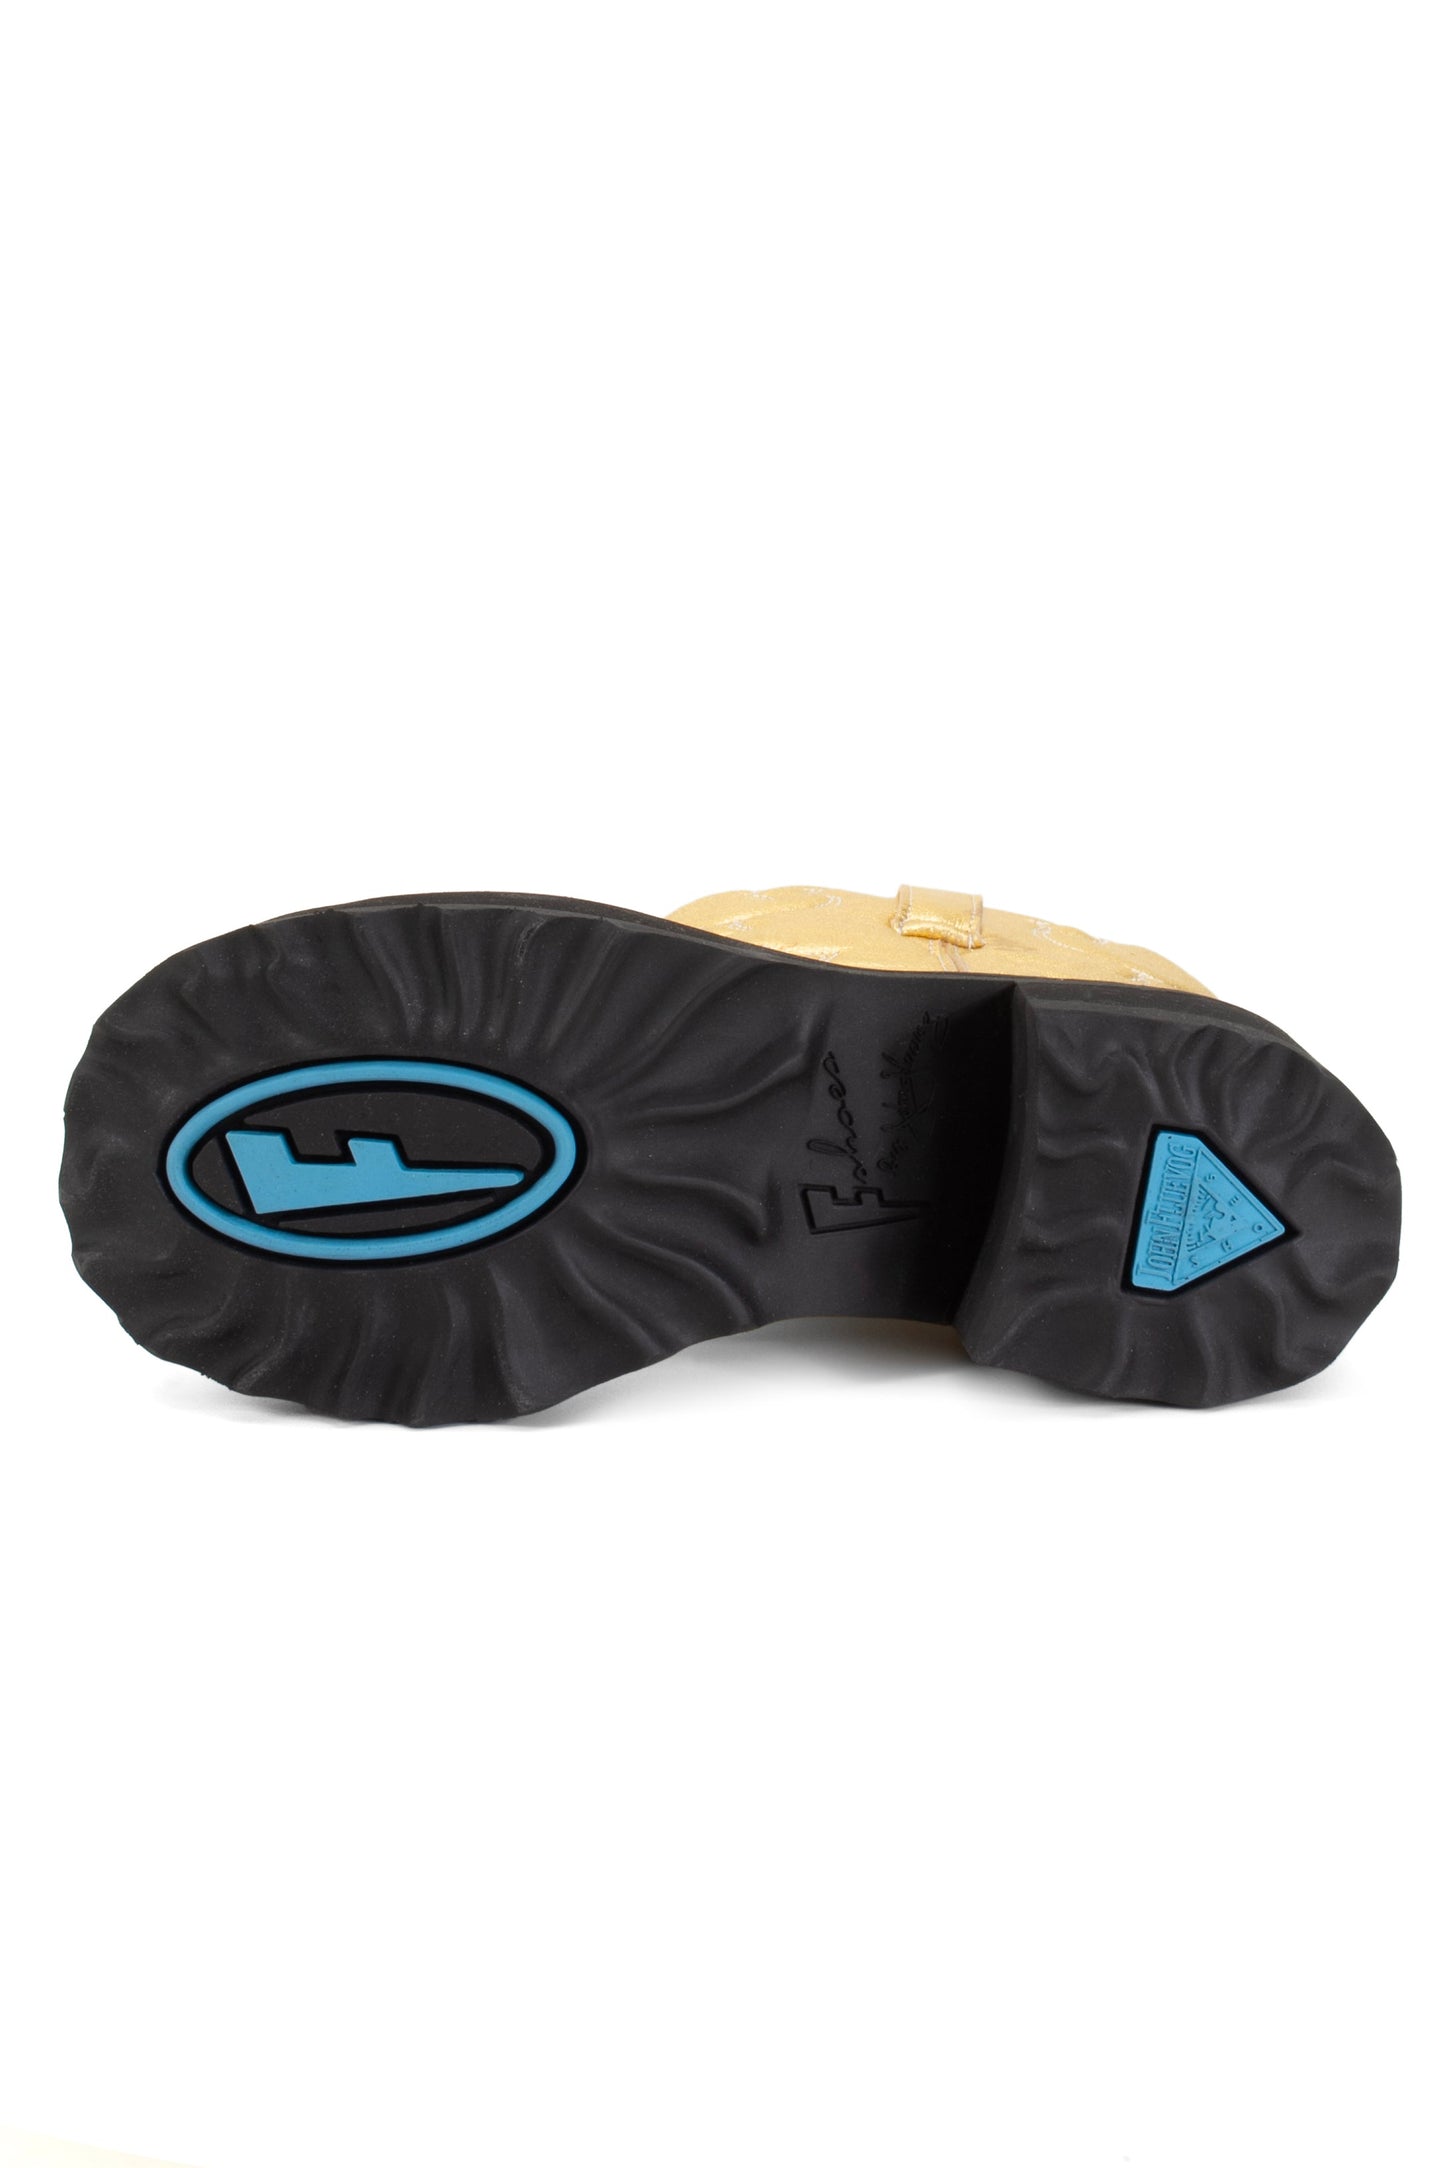 black wavy shape sole, blue F on front, signature is in the middle, blue J. Fluevog logo back